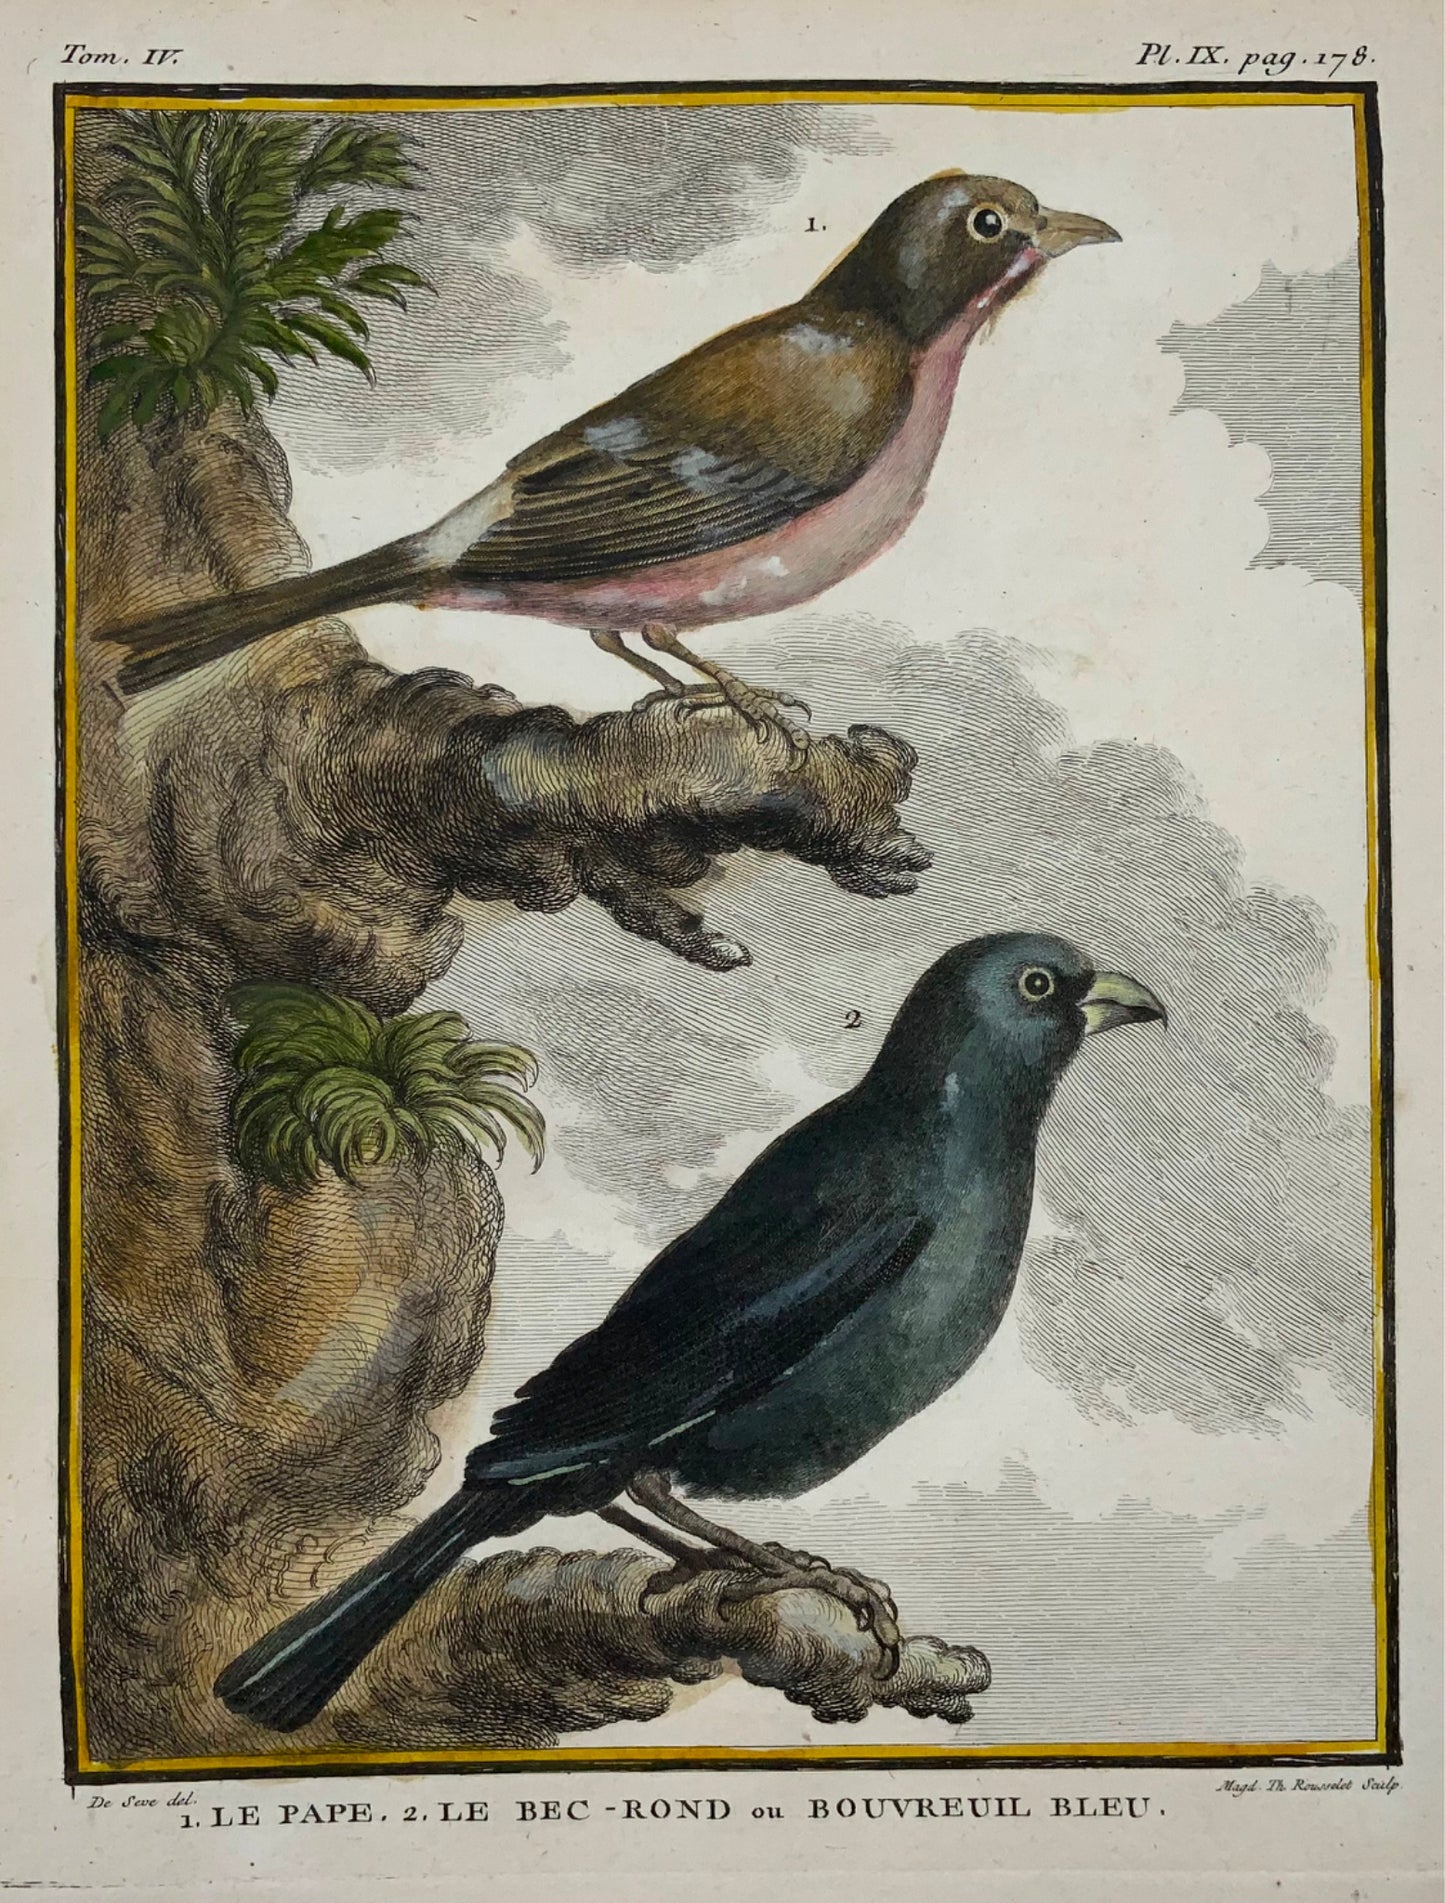 1779 de Seve - BULLFINCHES - Ornithology - 4to Large Edn engraving